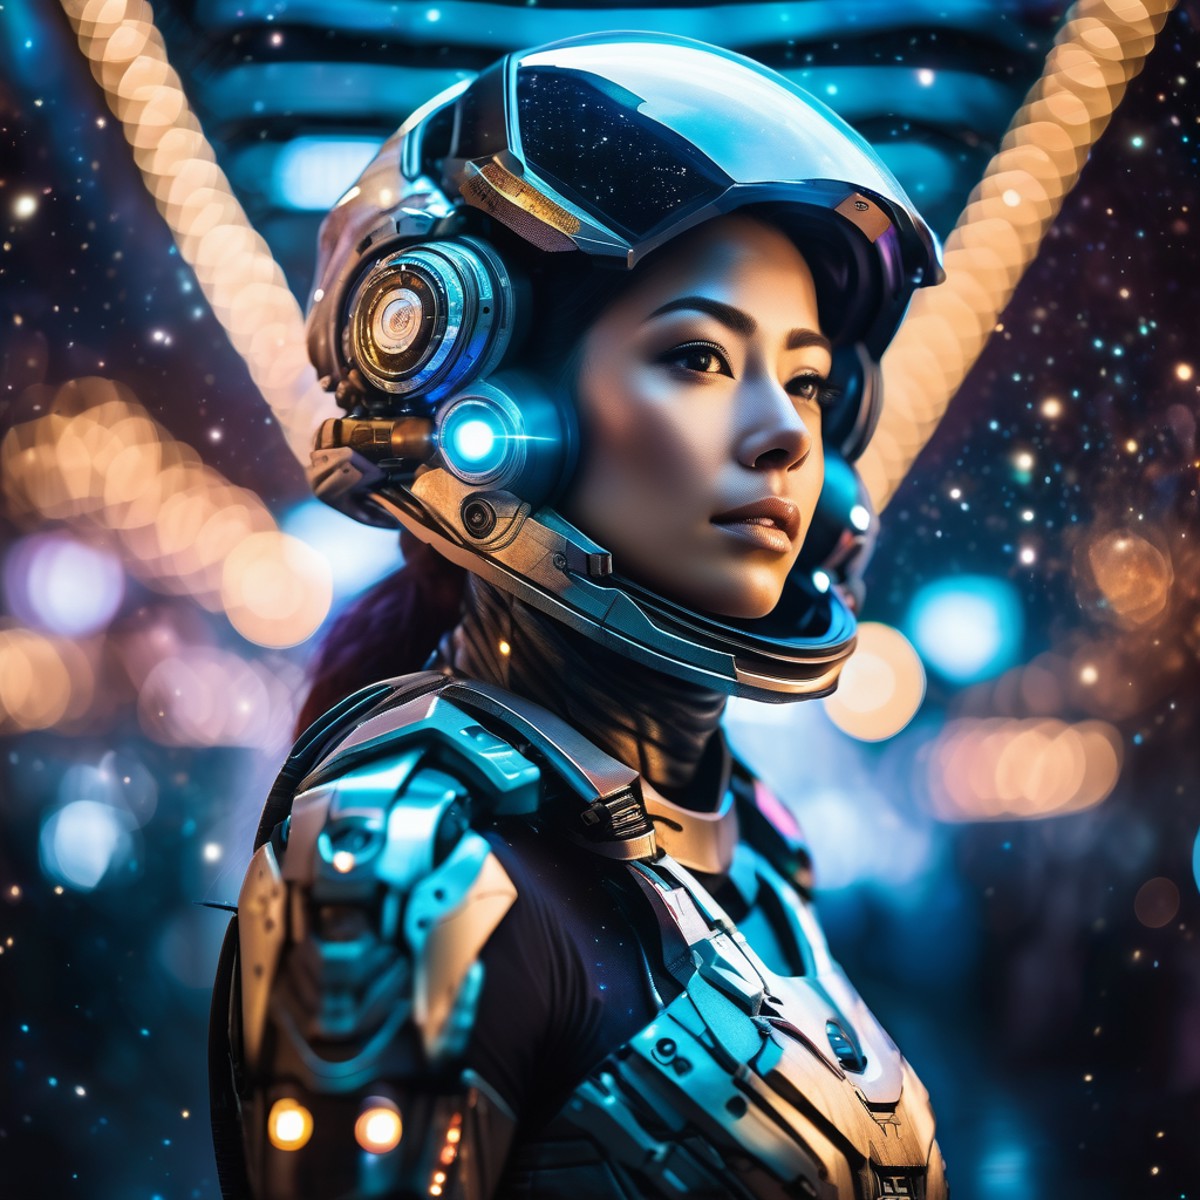 an award winning photograph of a beautiful woman, halo, intricate cyberpunk robot, highly detailed, soft bokeh Deep space ...